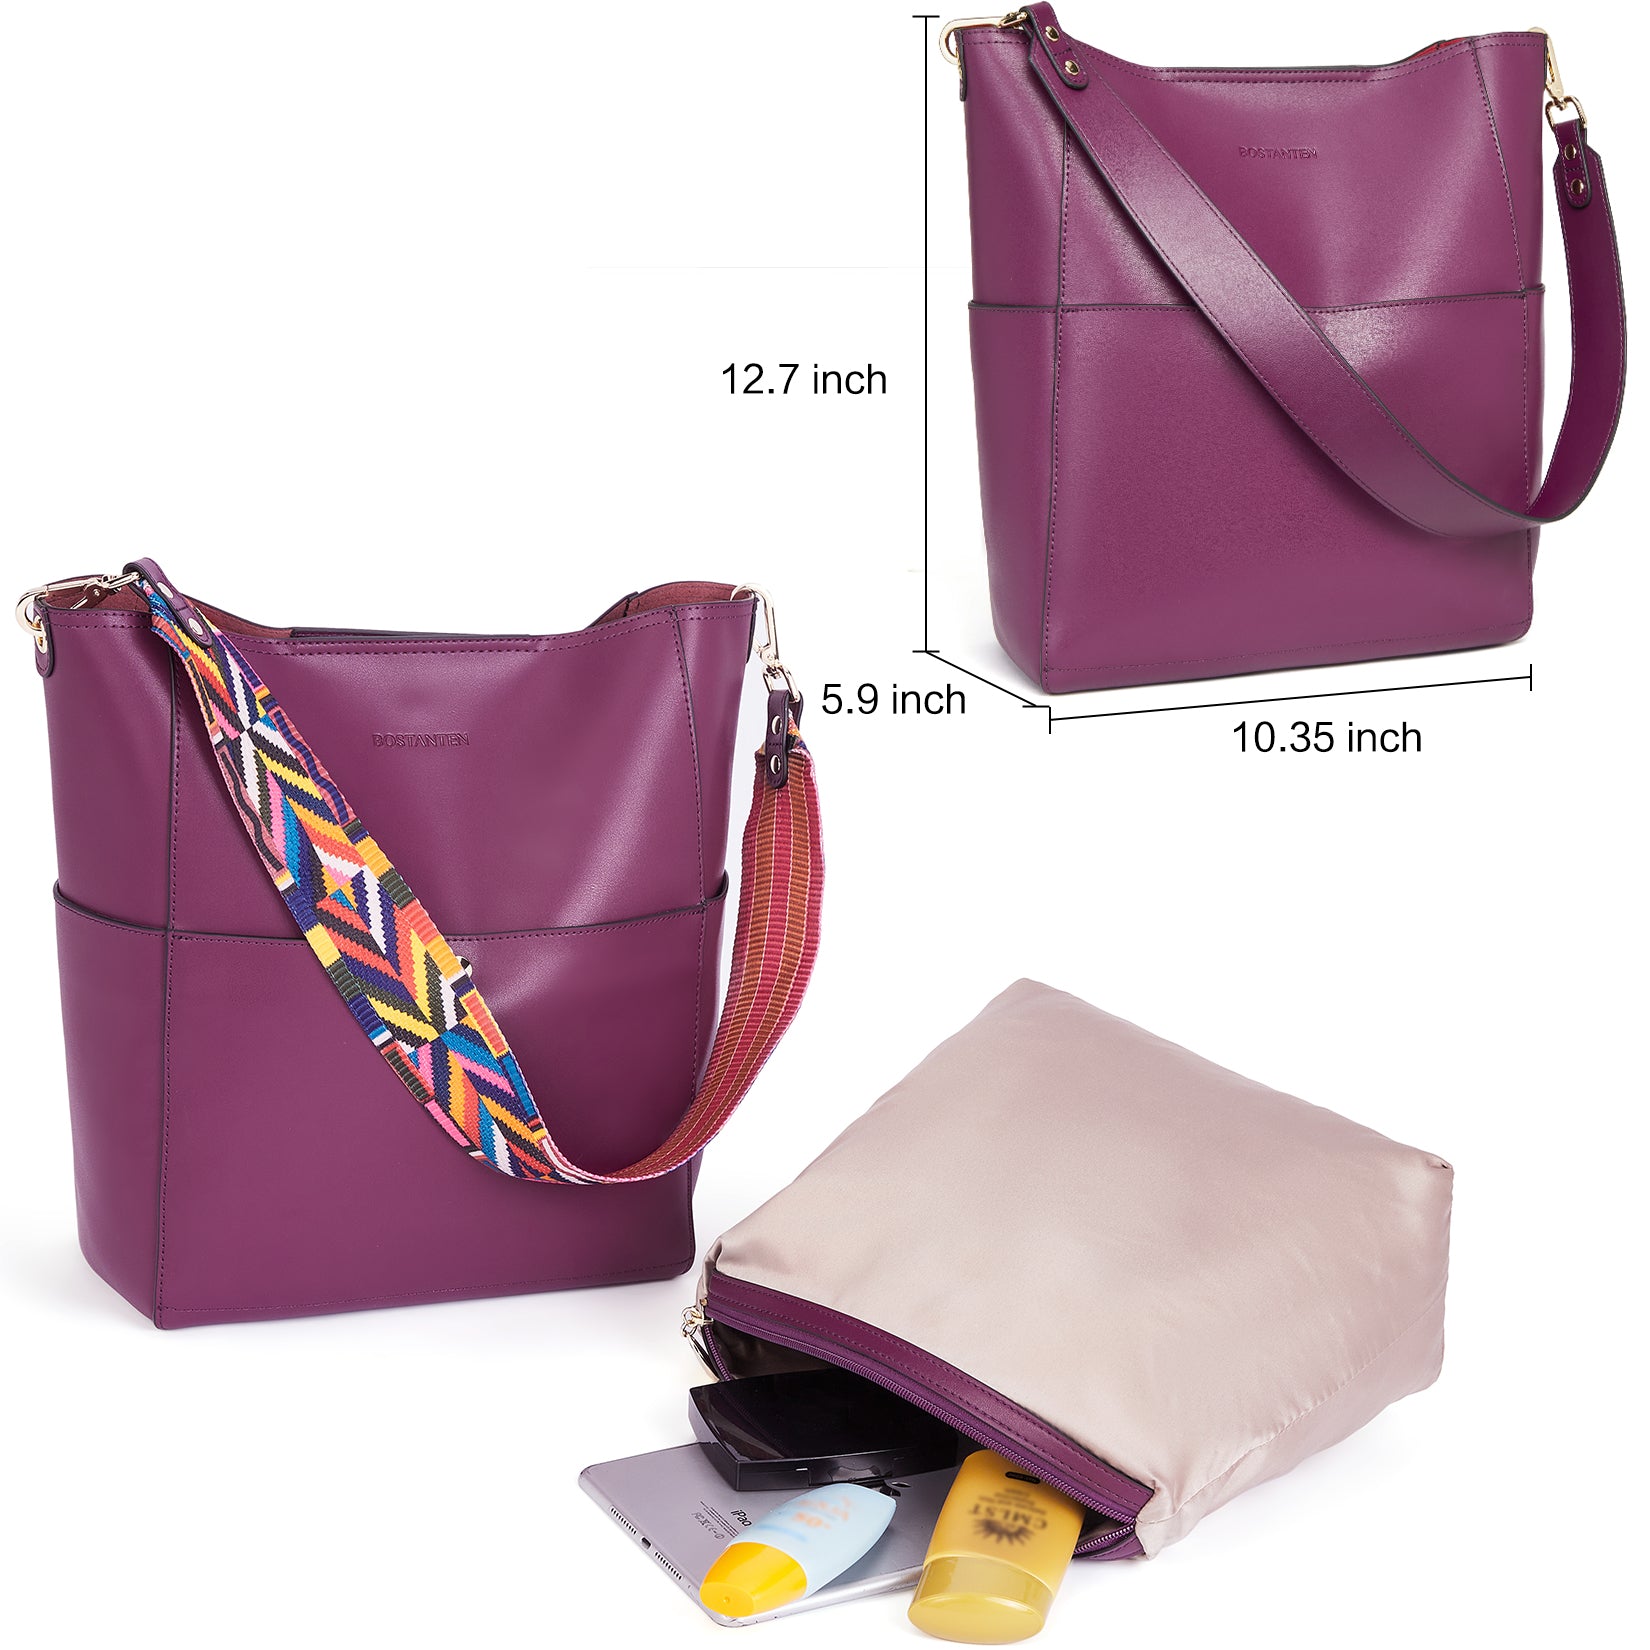 GRTG Purses Handbags Women's small shoulder bag, women's handbag, summer,  white, pink, blue (Color : Purple) : Buy Online at Best Price in KSA - Souq  is now Amazon.sa: Fashion